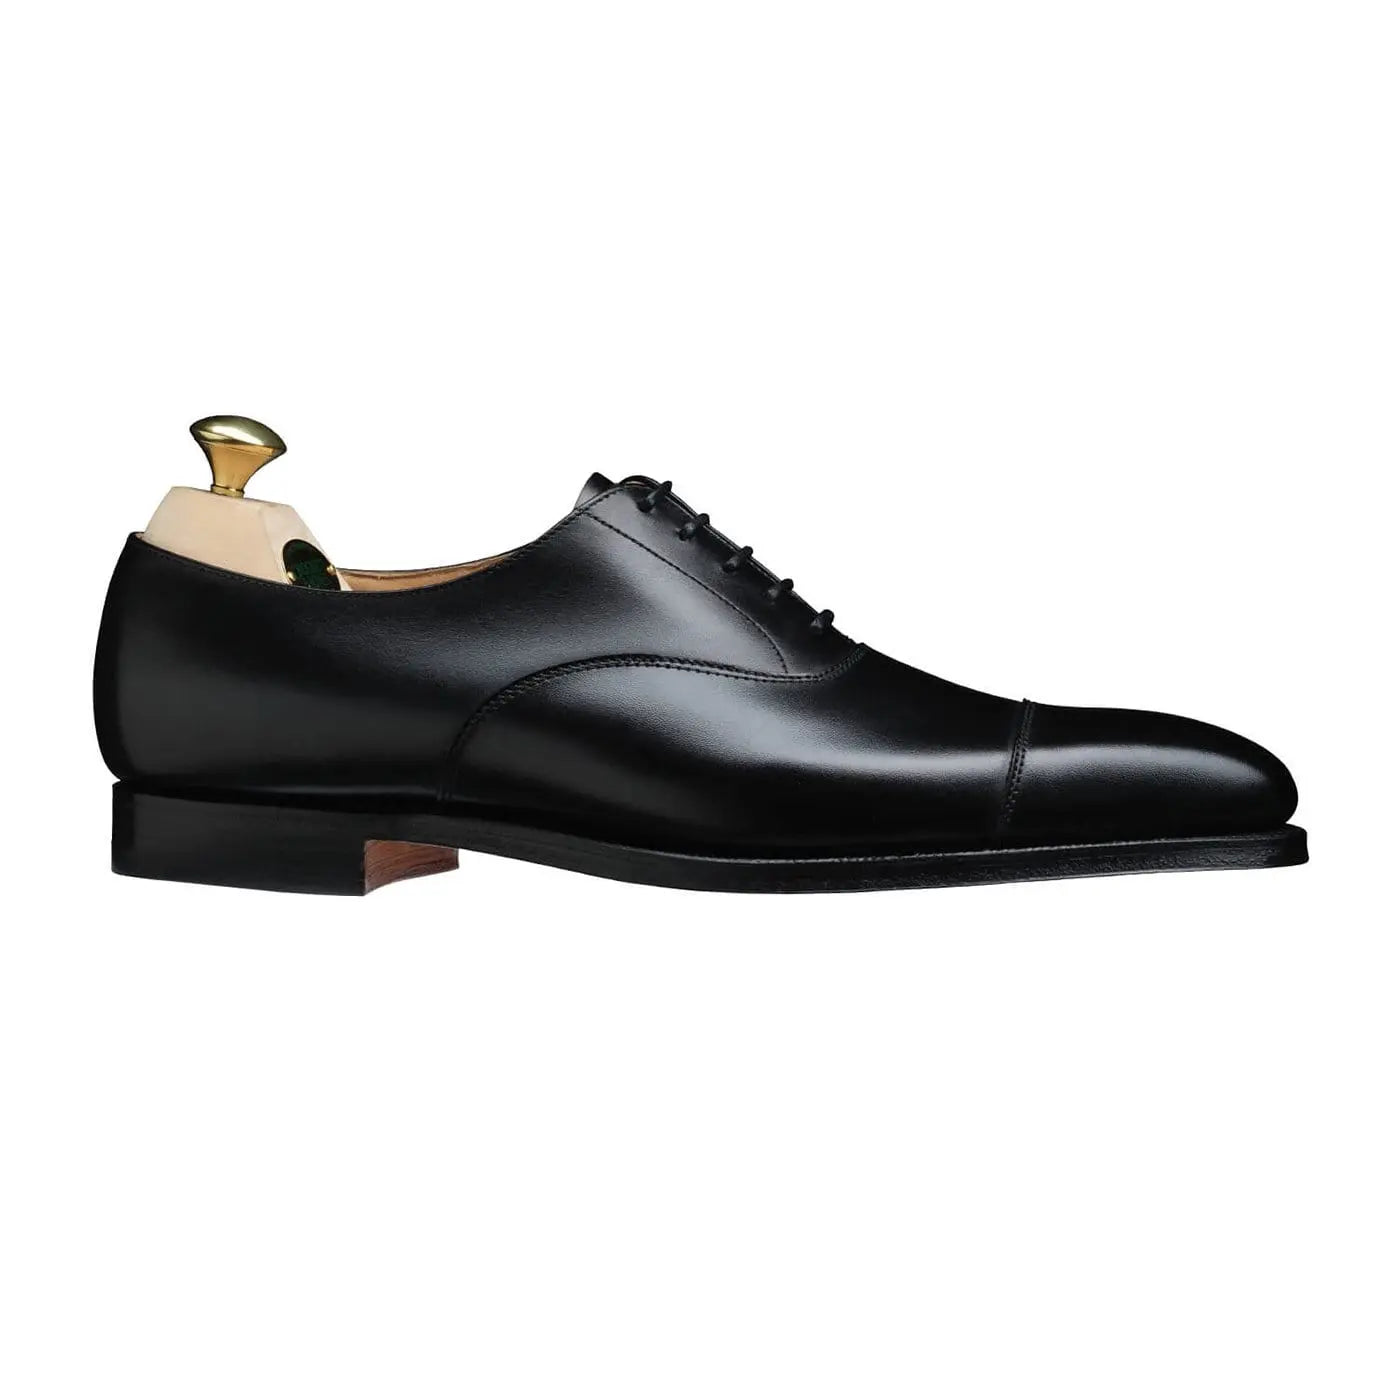 Hallam Oxford Shoes - E Fitting  Crockett & Jones   